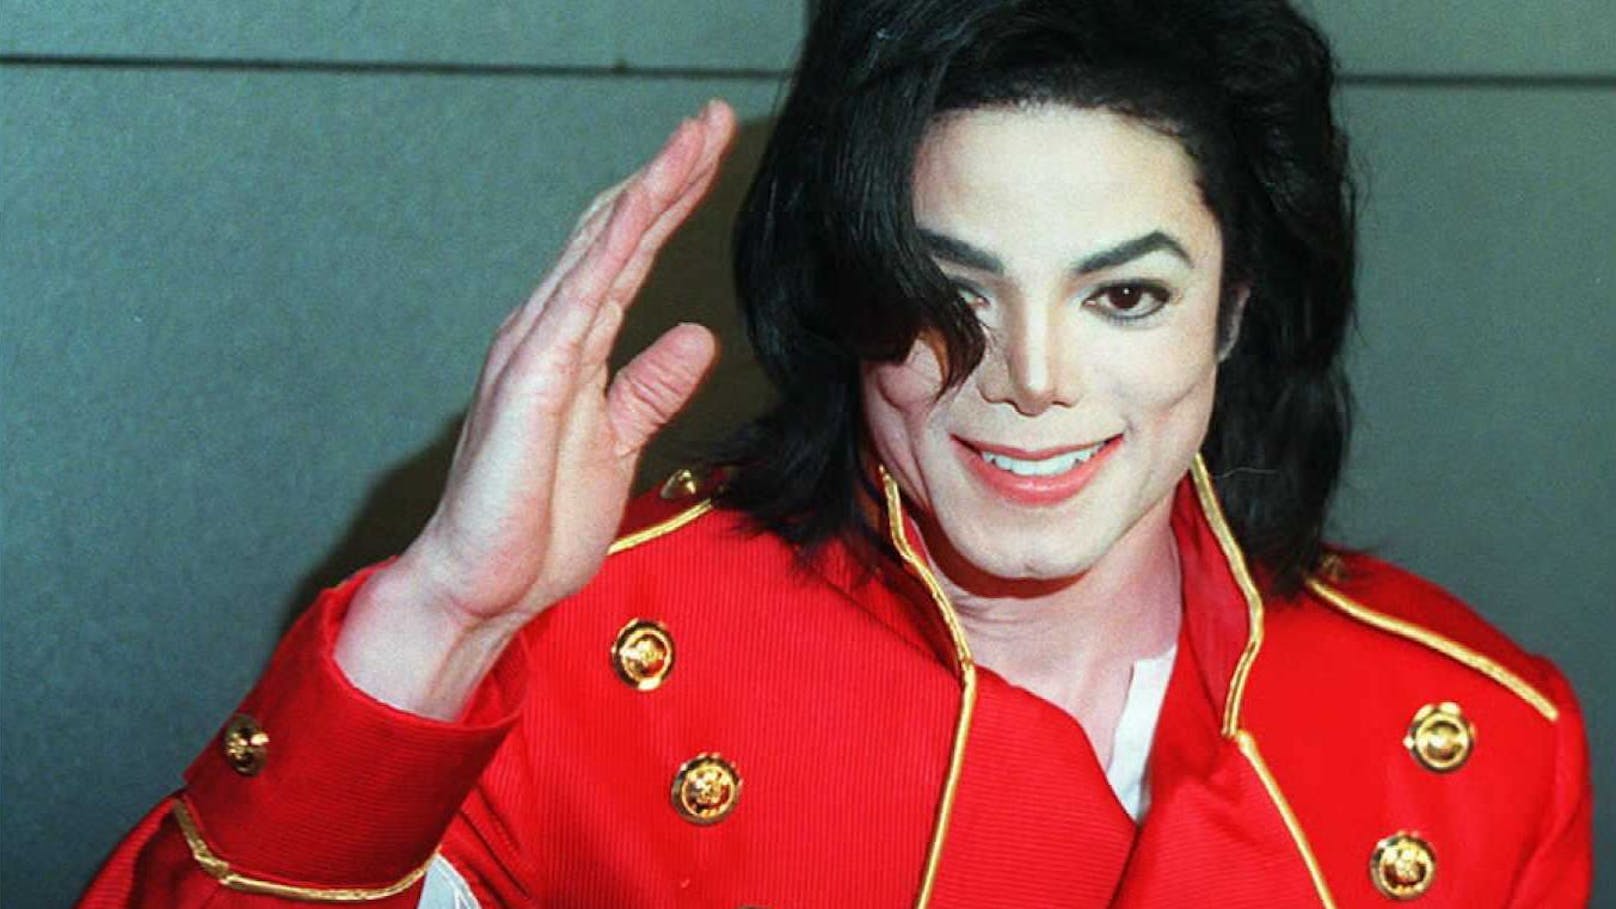 Bald startet Michael Jackson-Doku auf MTV